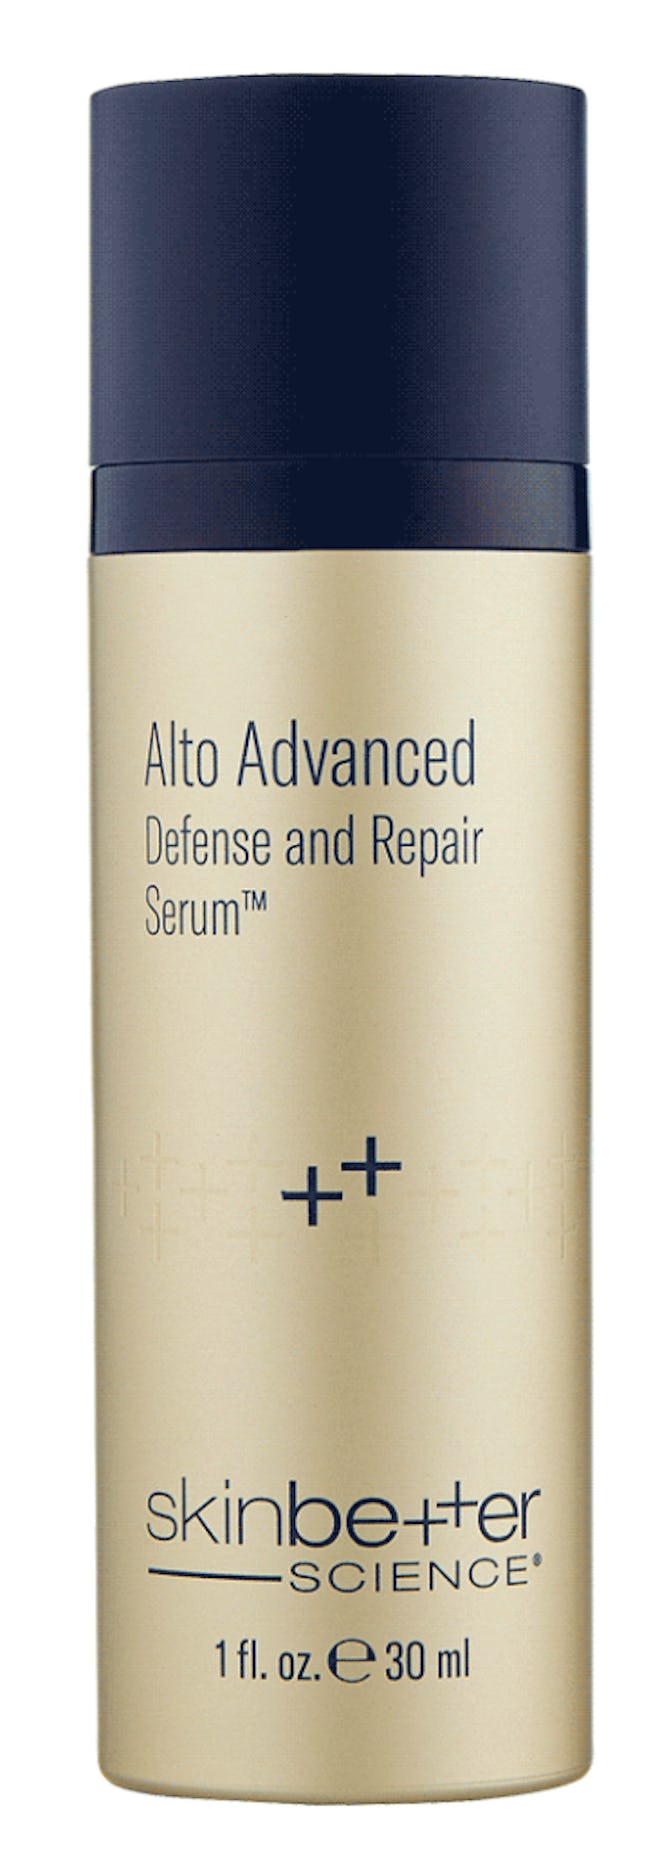 Skinbetter Science Alto Advanced Defense and Repair Serum